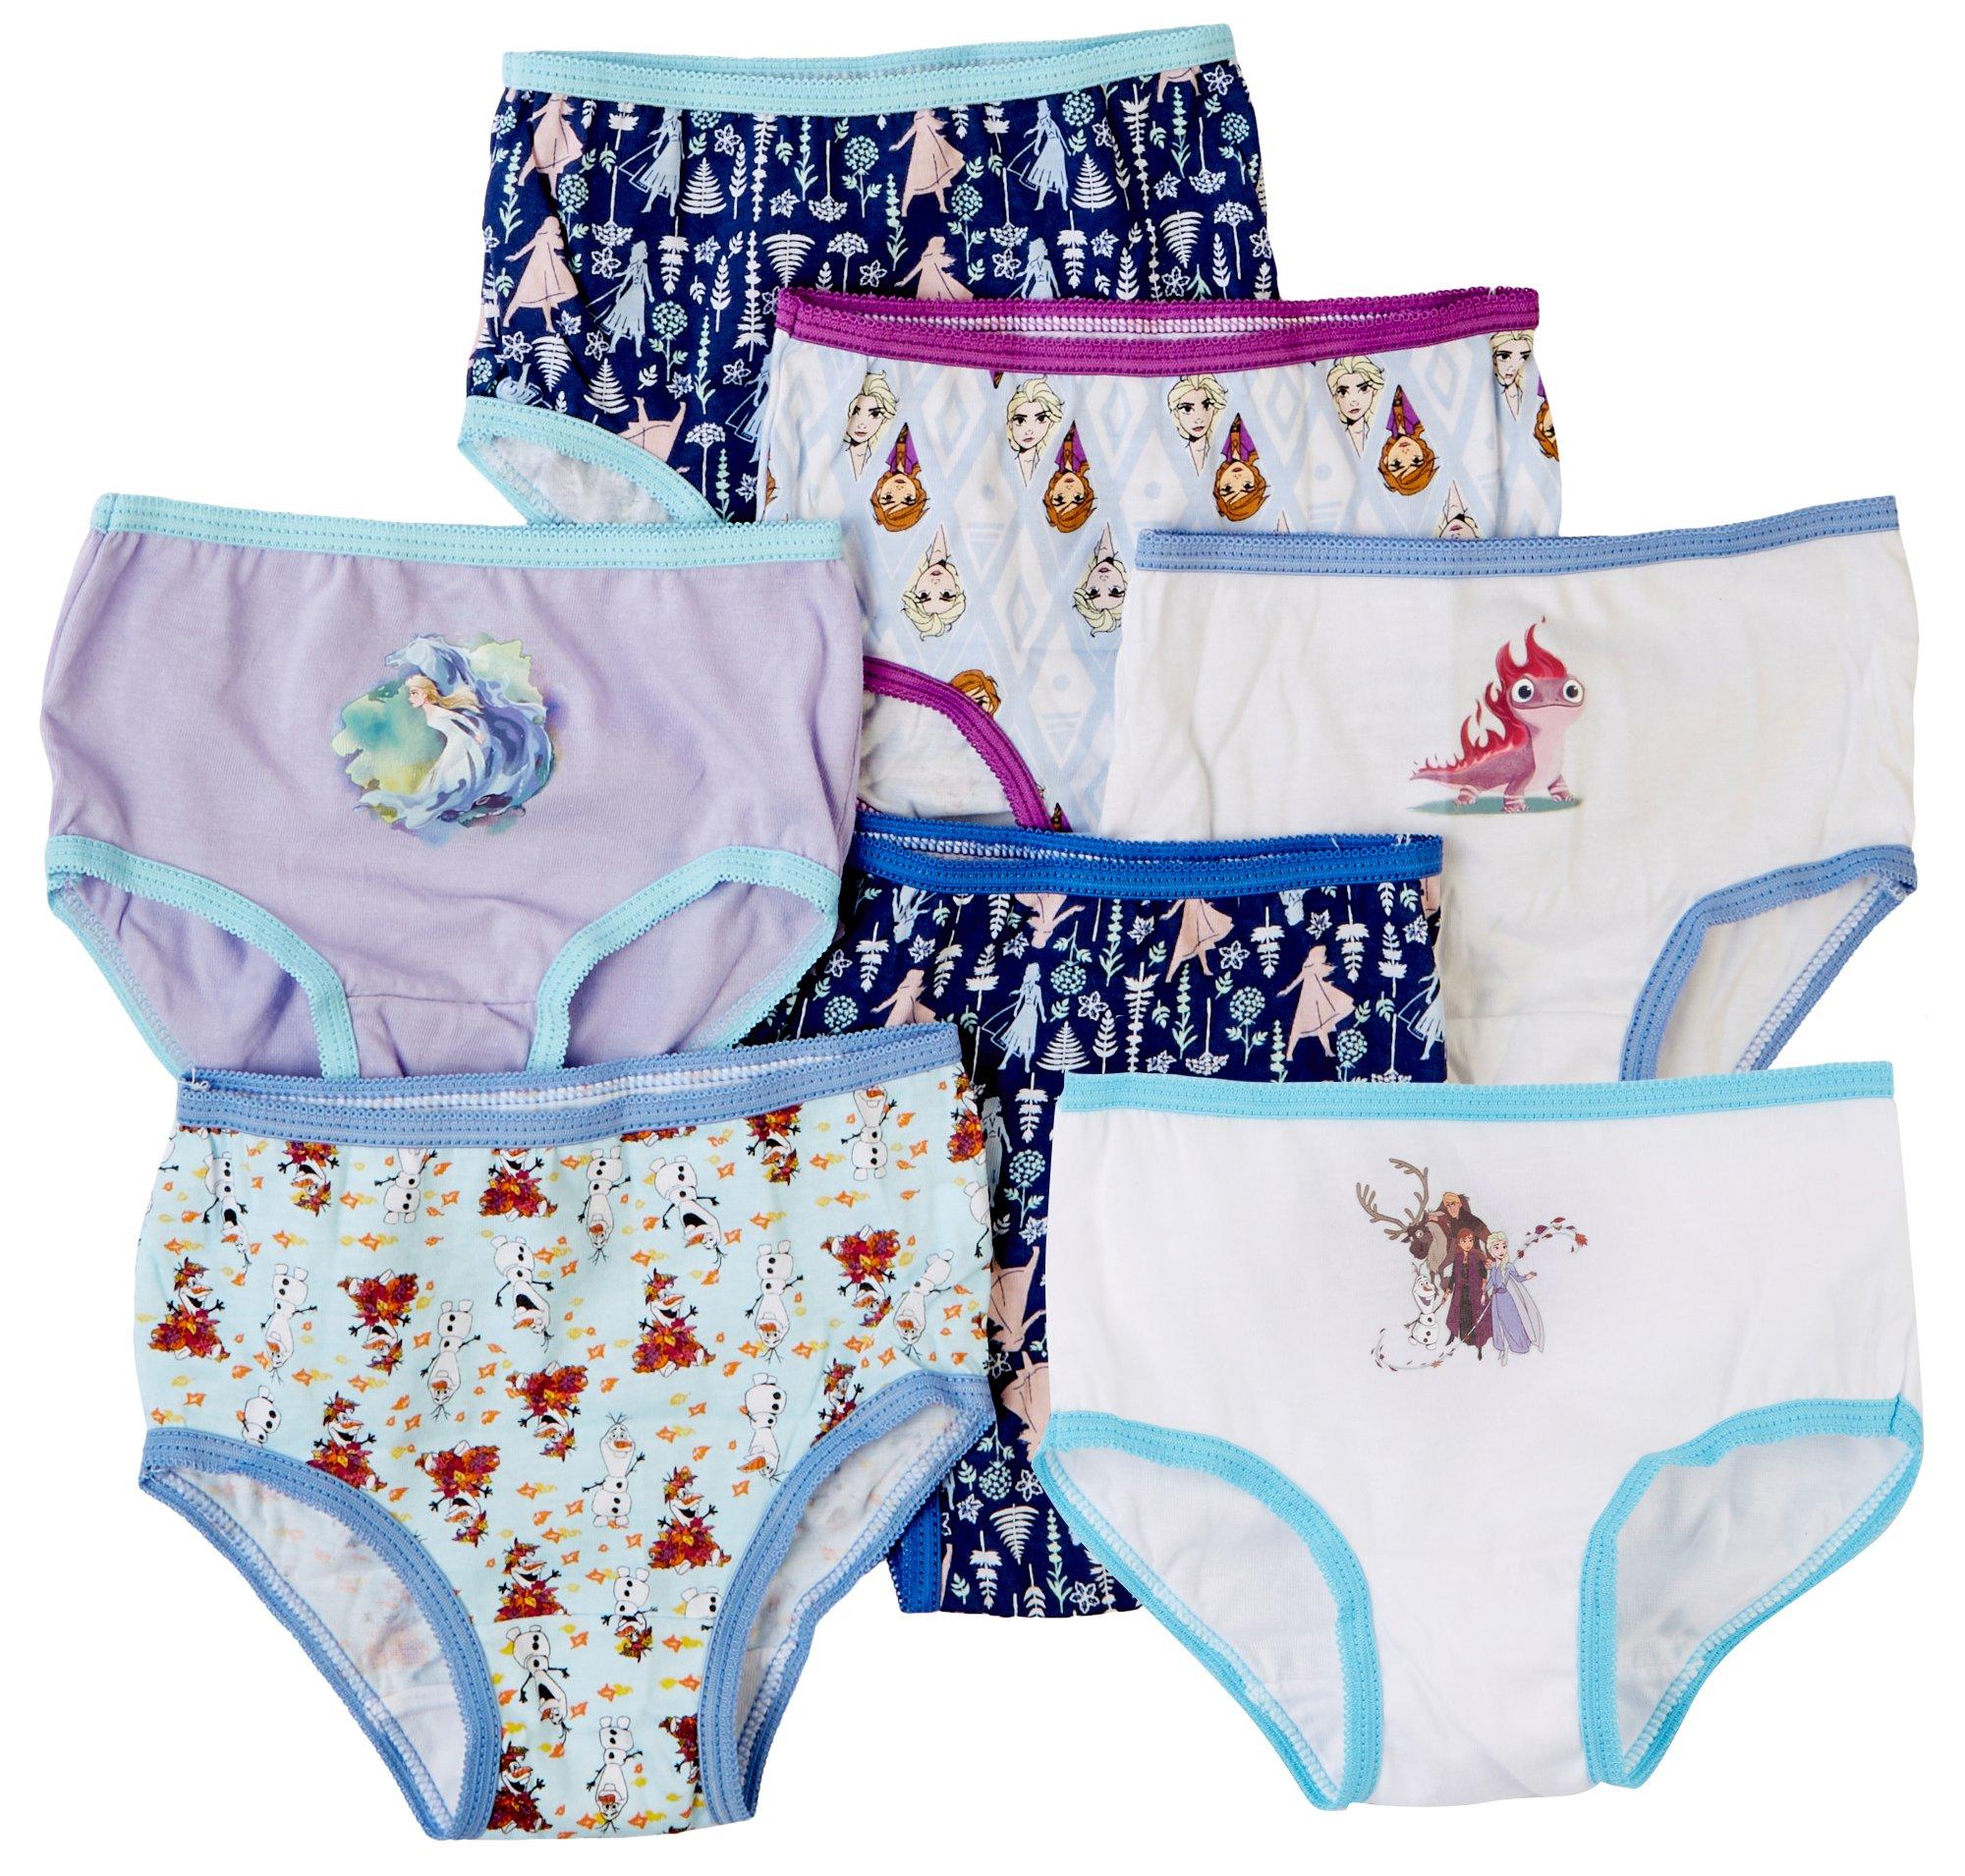  Sweet Princess Girls' Underwear - 100% Cotton Bikini Briefs, 7  Pack (Size: 4-6X), Size 4, Bright Assorted: Clothing, Shoes & Jewelry